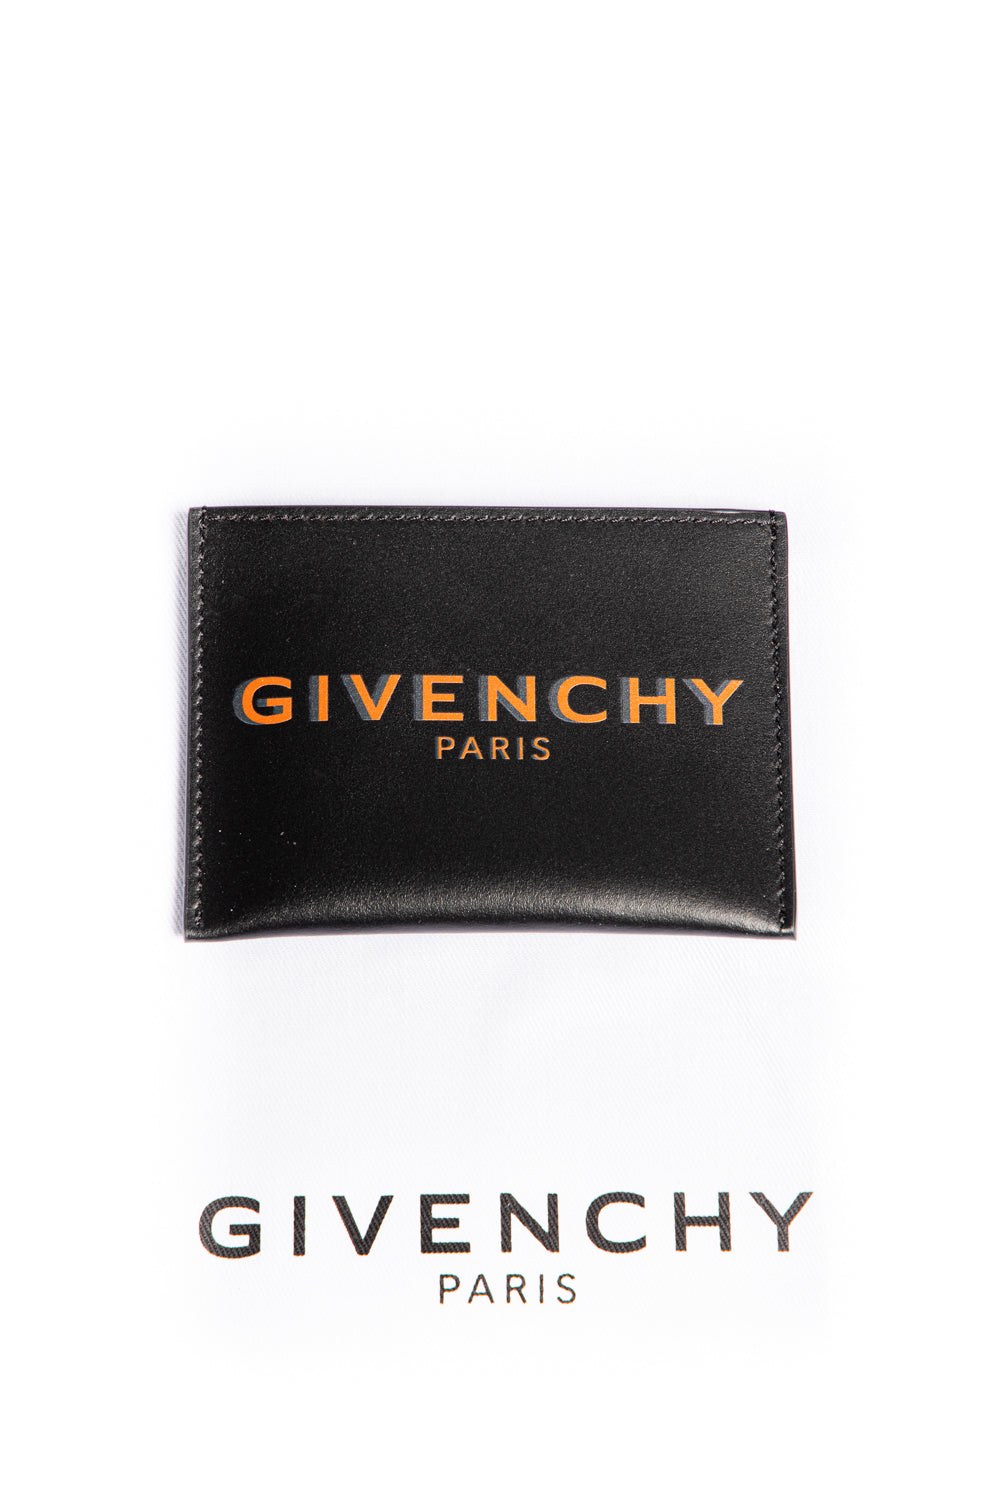 Givenchy Portacarte In Pelle vista frontale